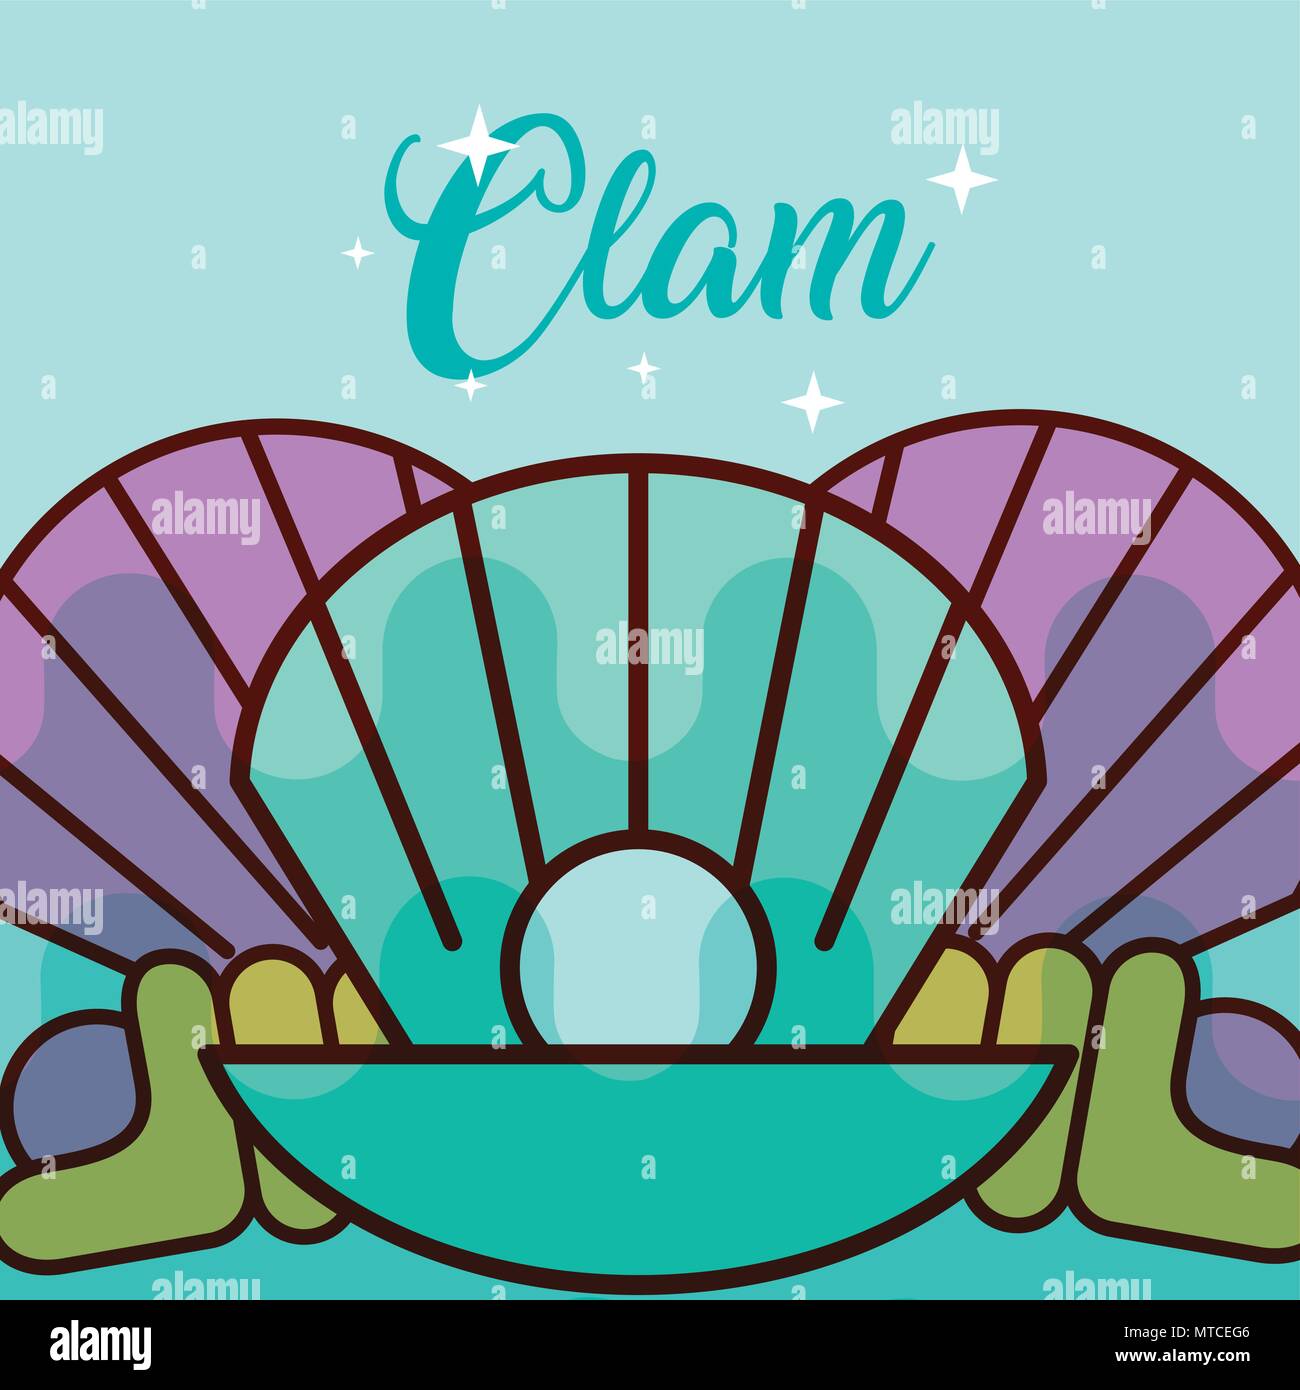 clam sea life cartoon Stock Vector